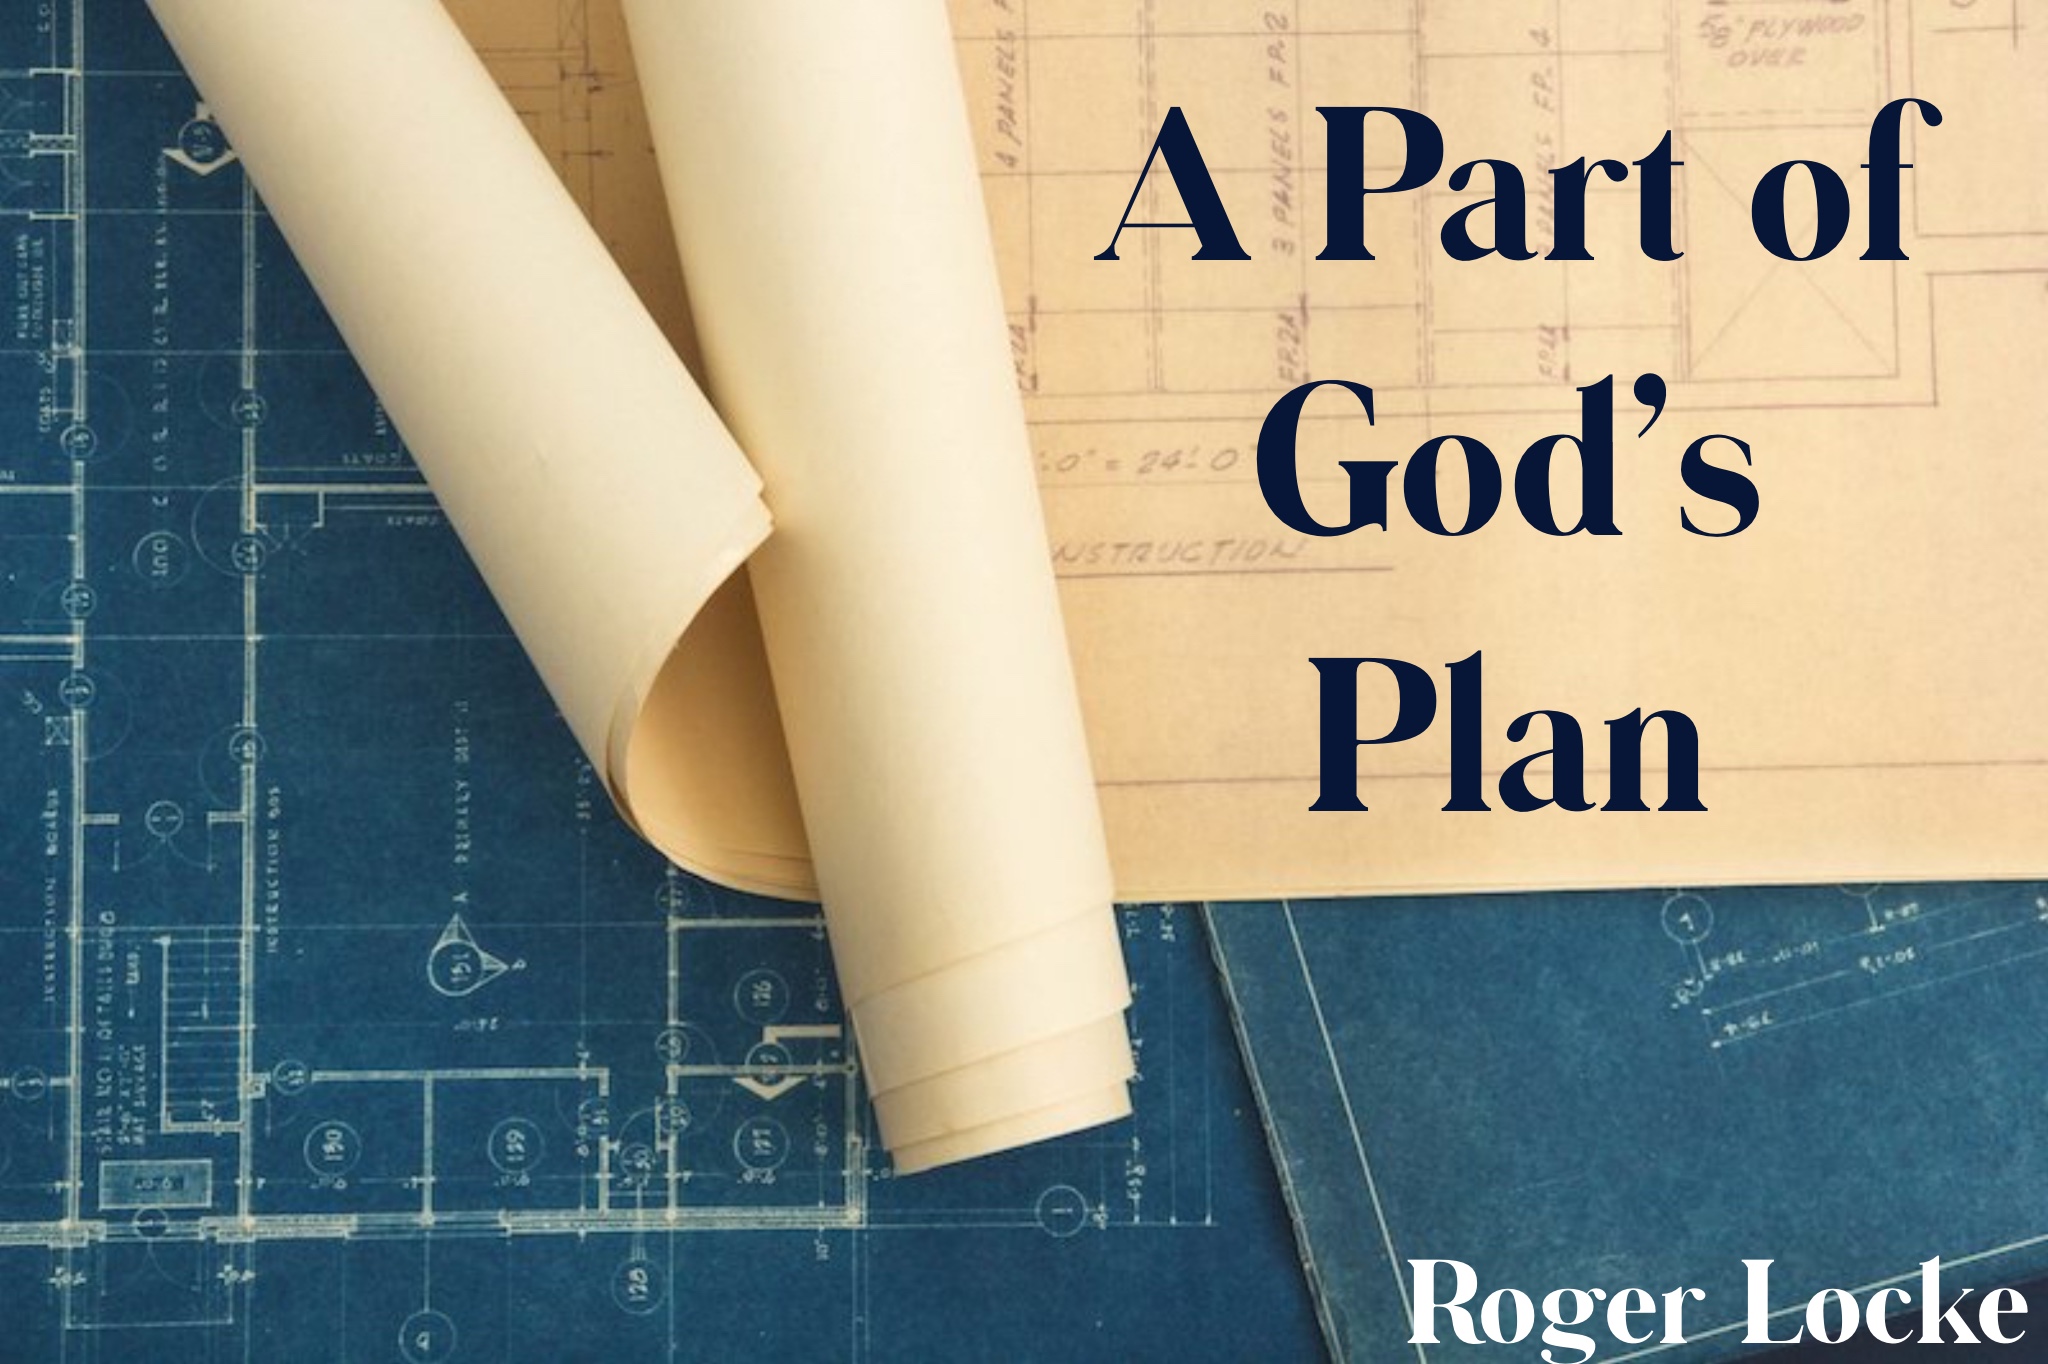 A Part of God's Plan